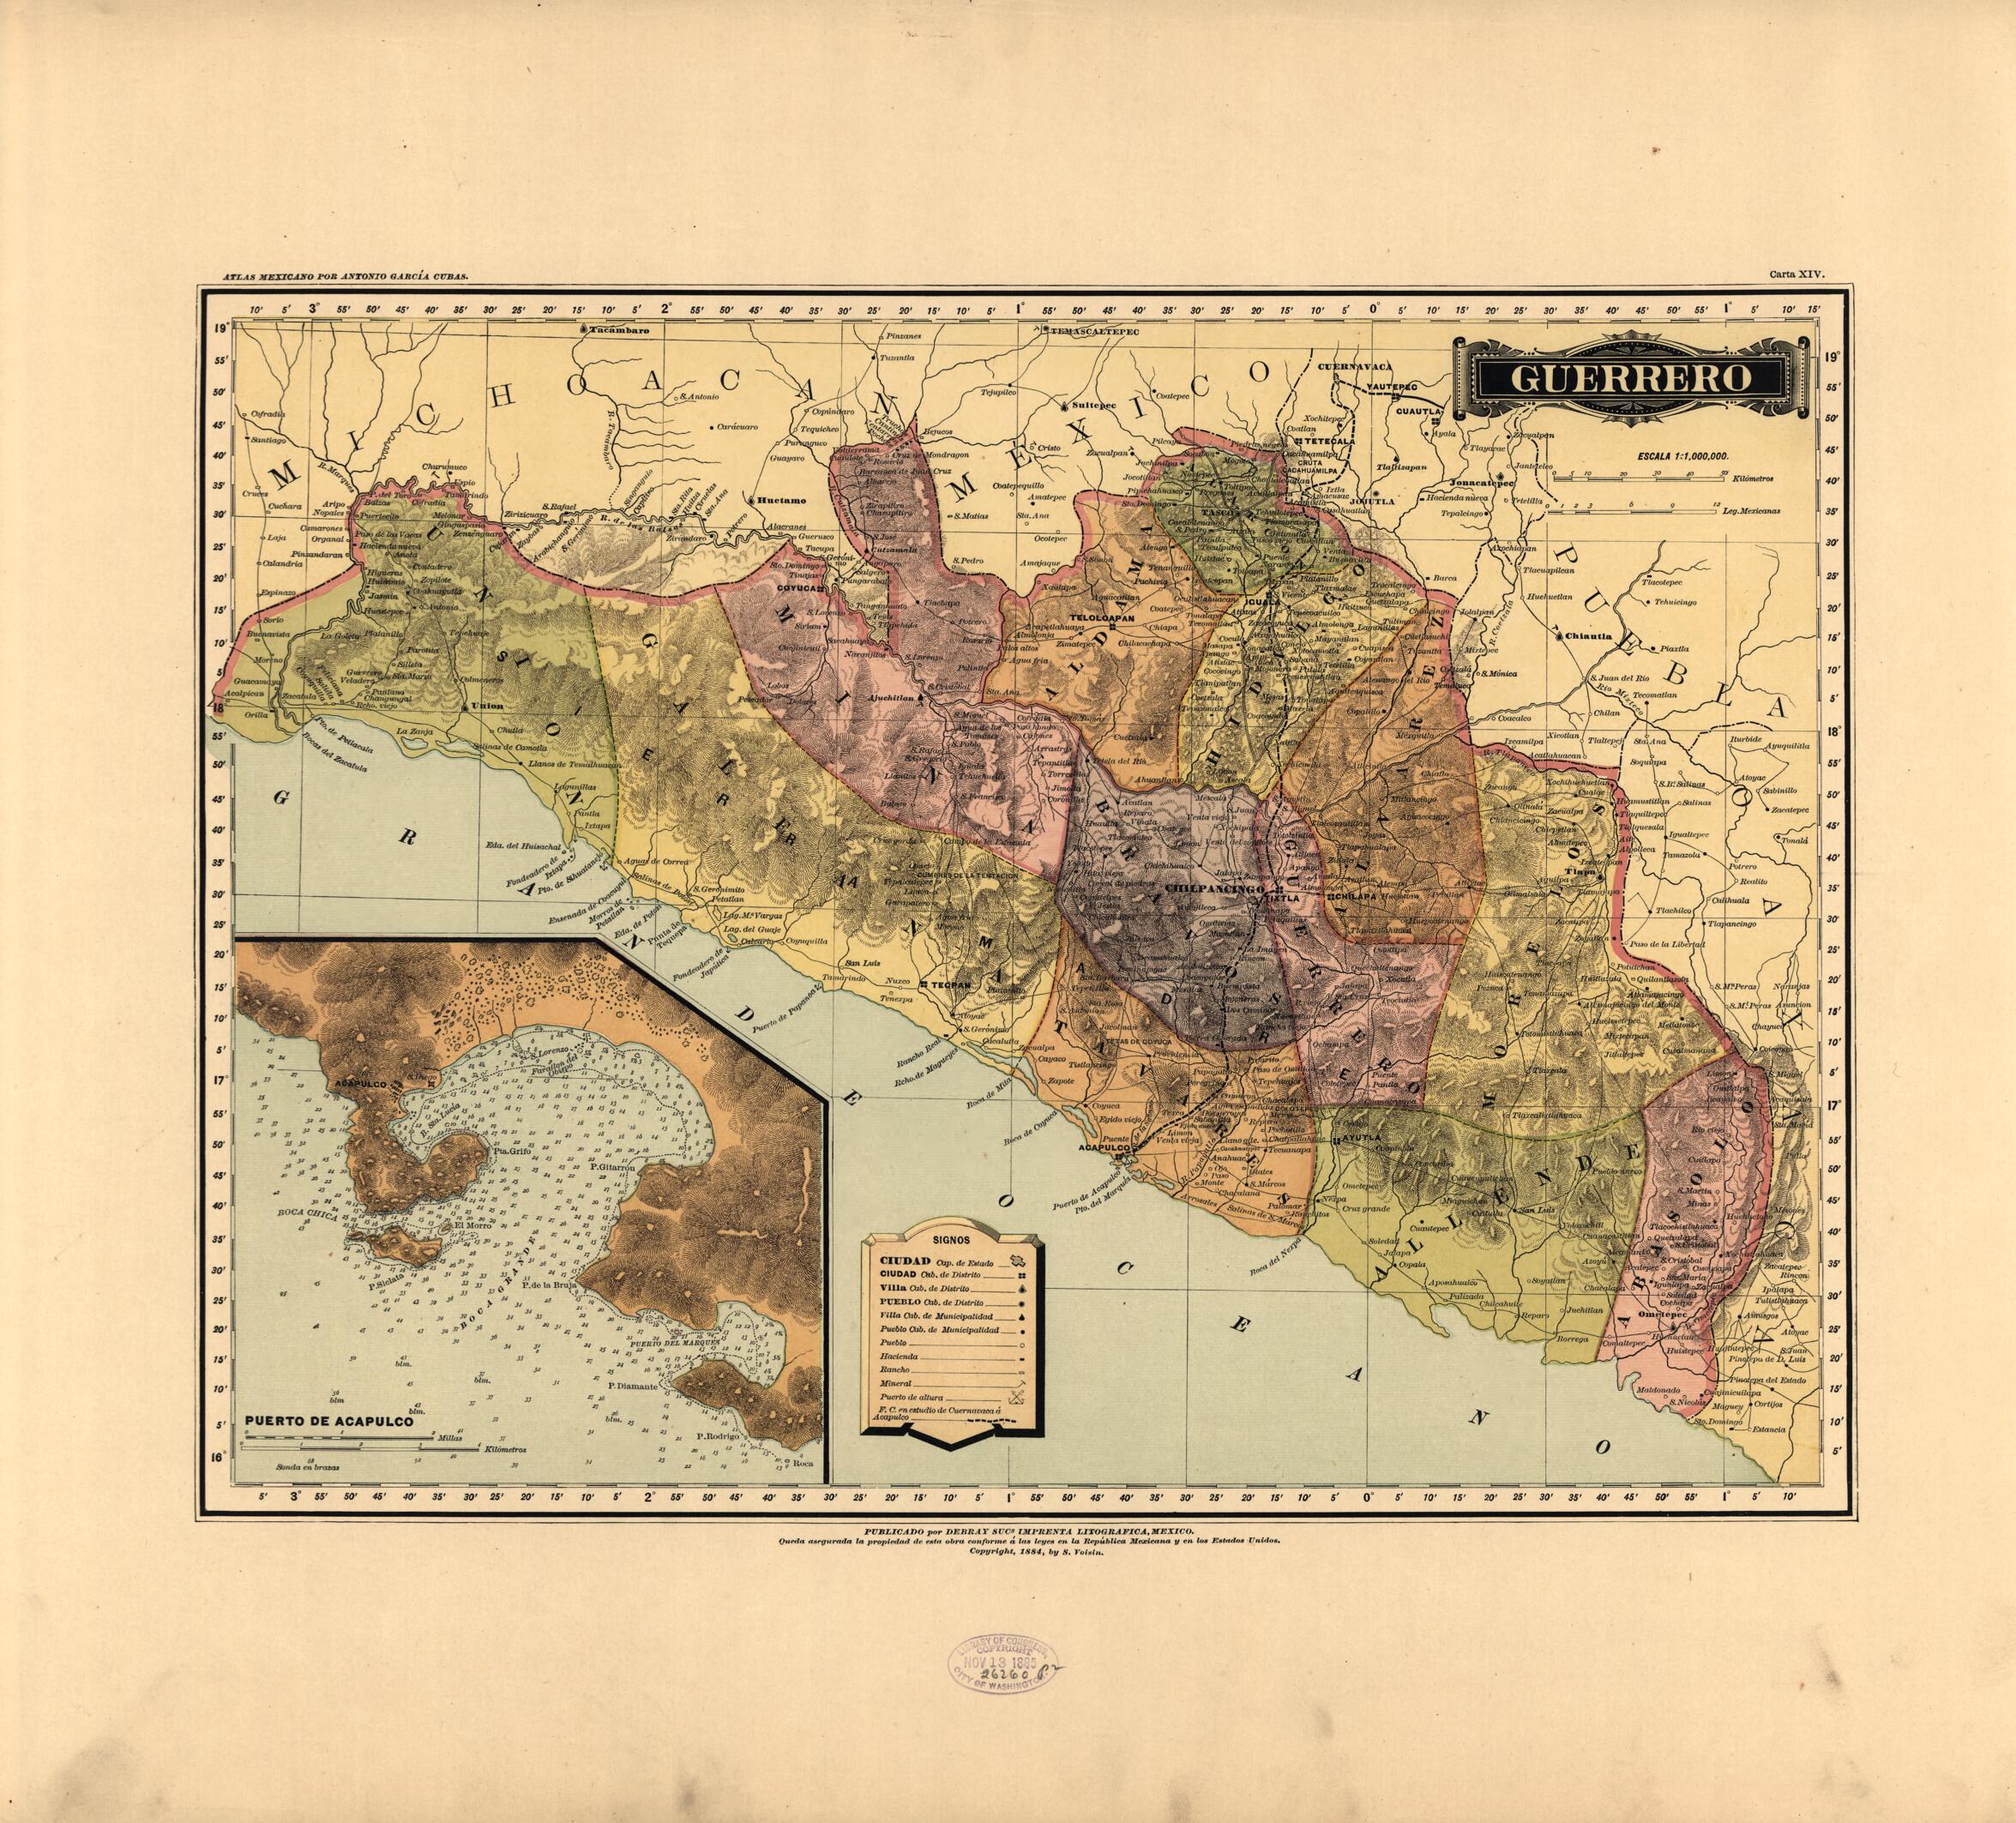 This old map of Guerrero from Atlas Mexicano. from 1884 was created by Antonio García Cubas in 1884